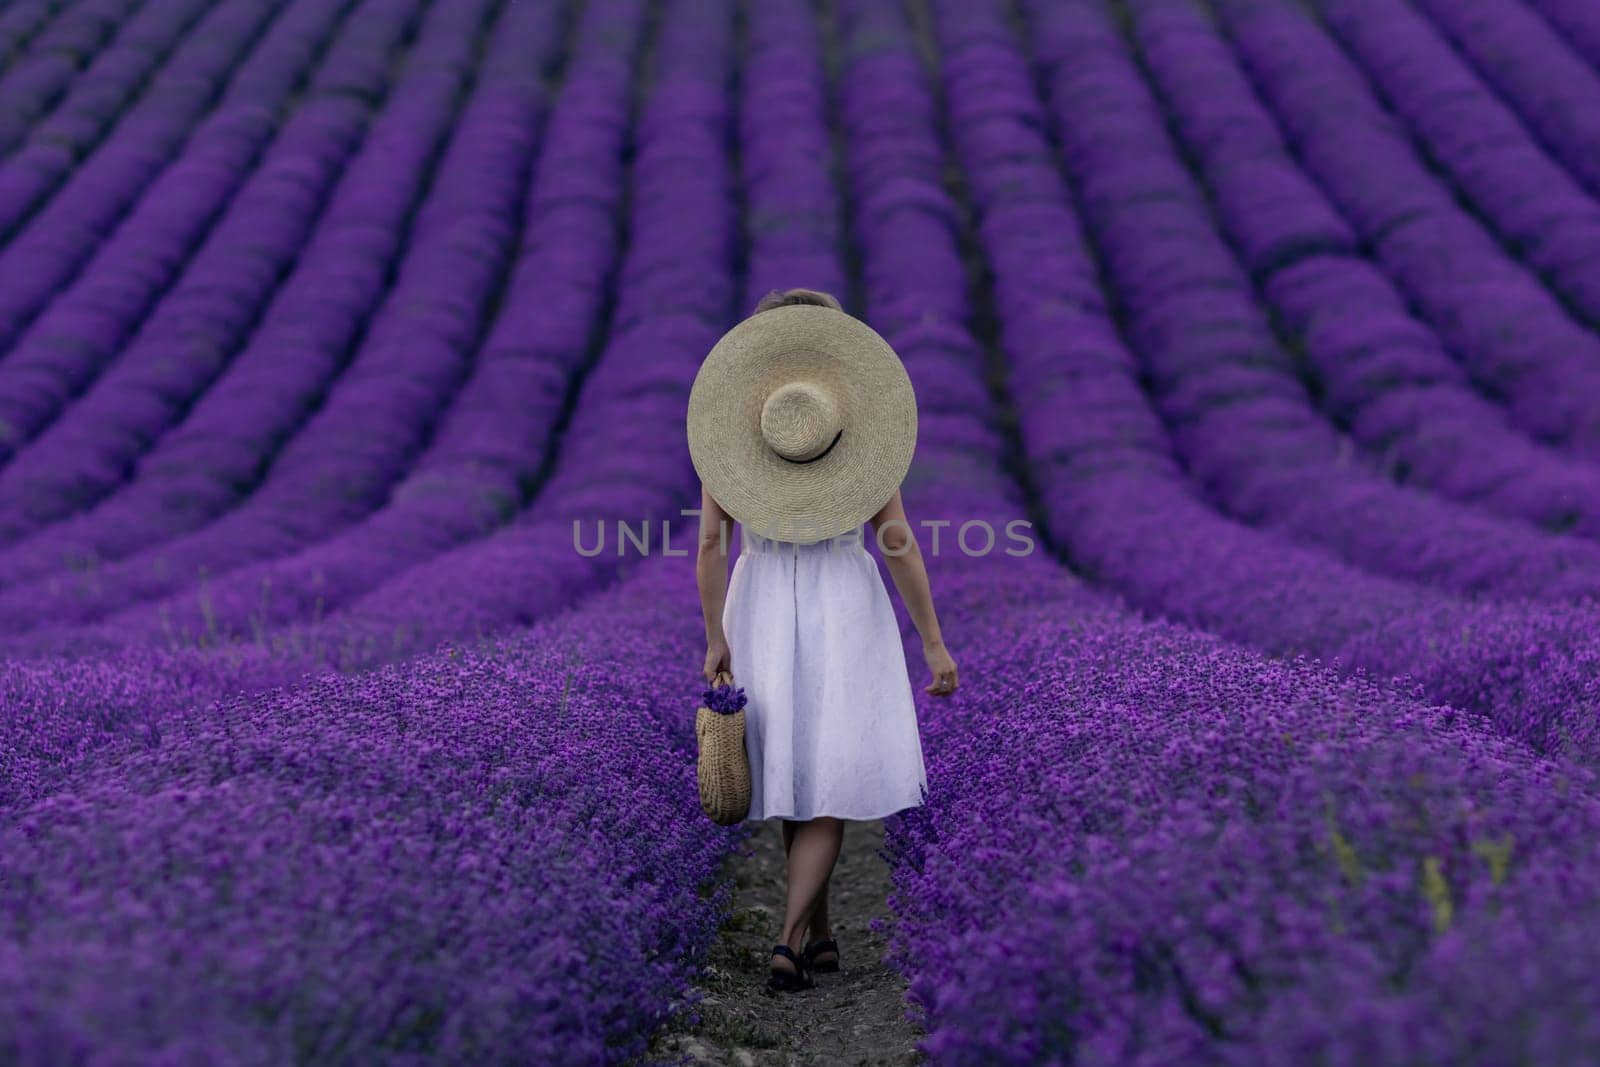 A woman wearing a straw hat walks through a field of purple flowers by Matiunina